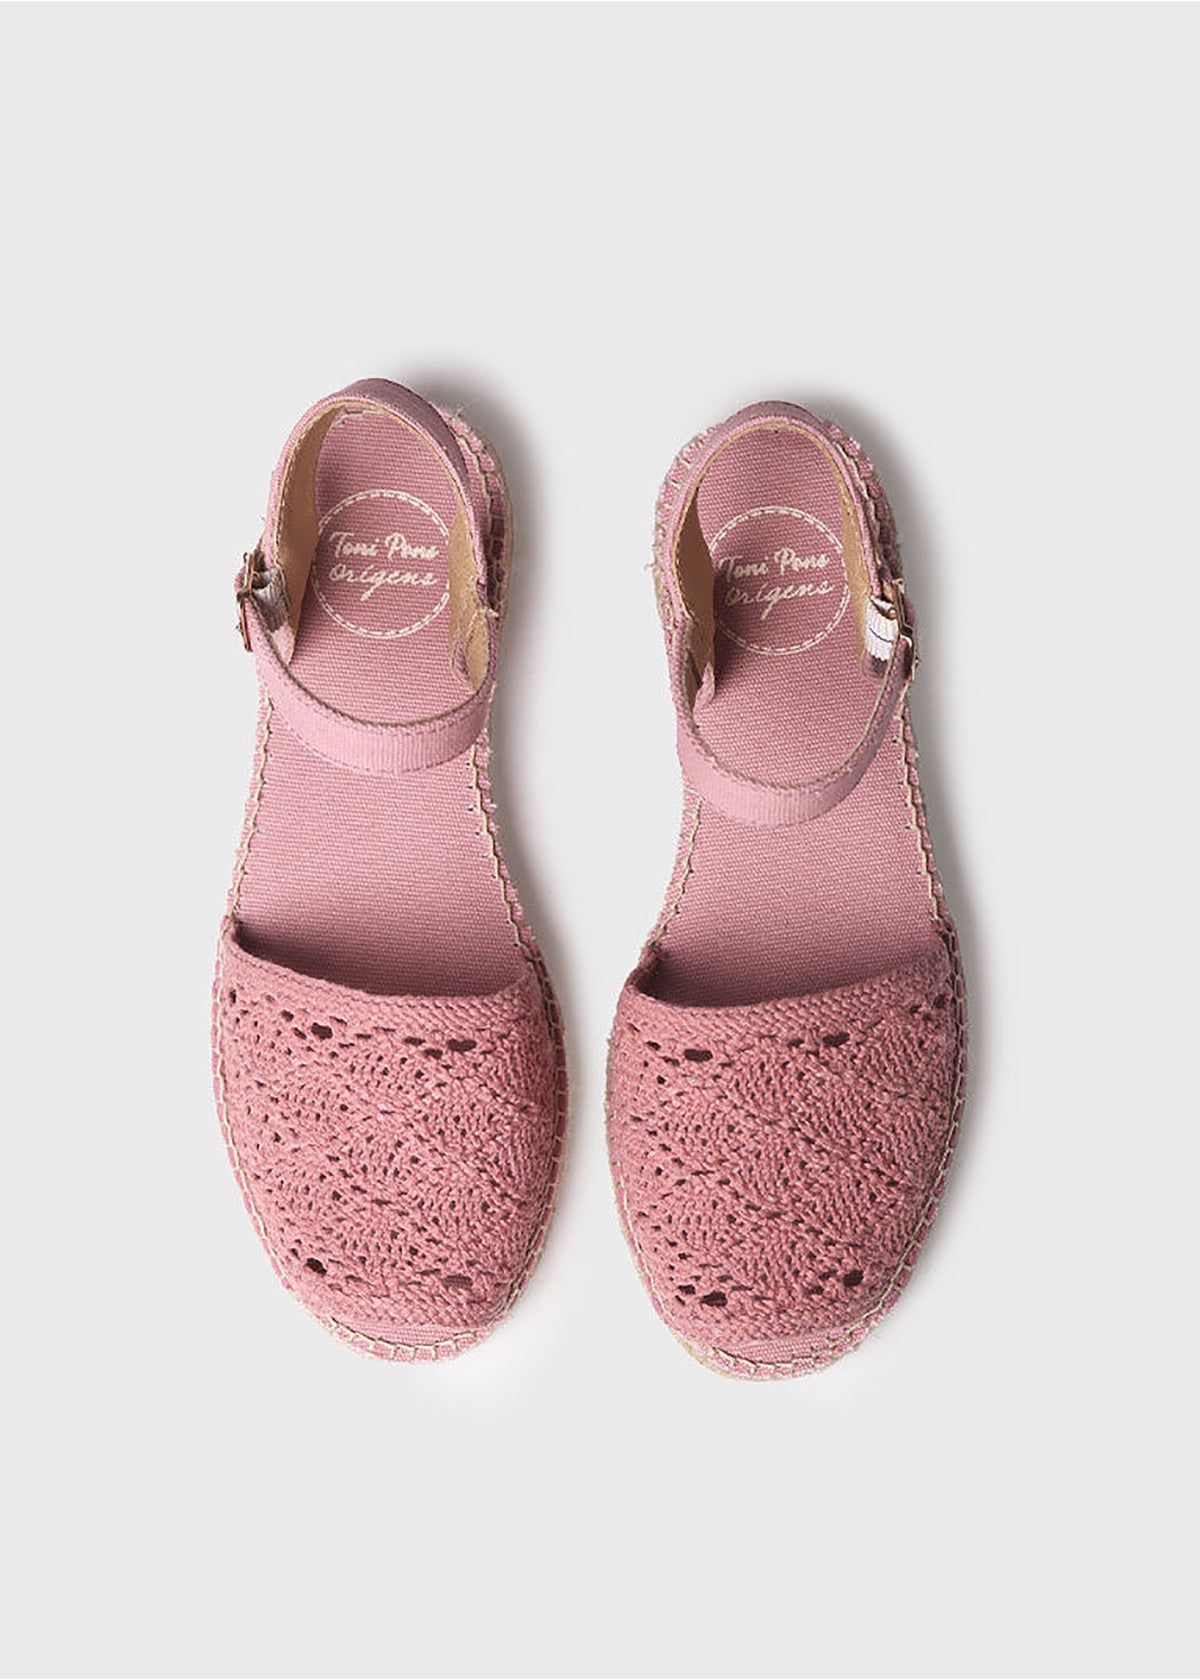 Espadrilles - Eulalia, pink lace fabric, vegan